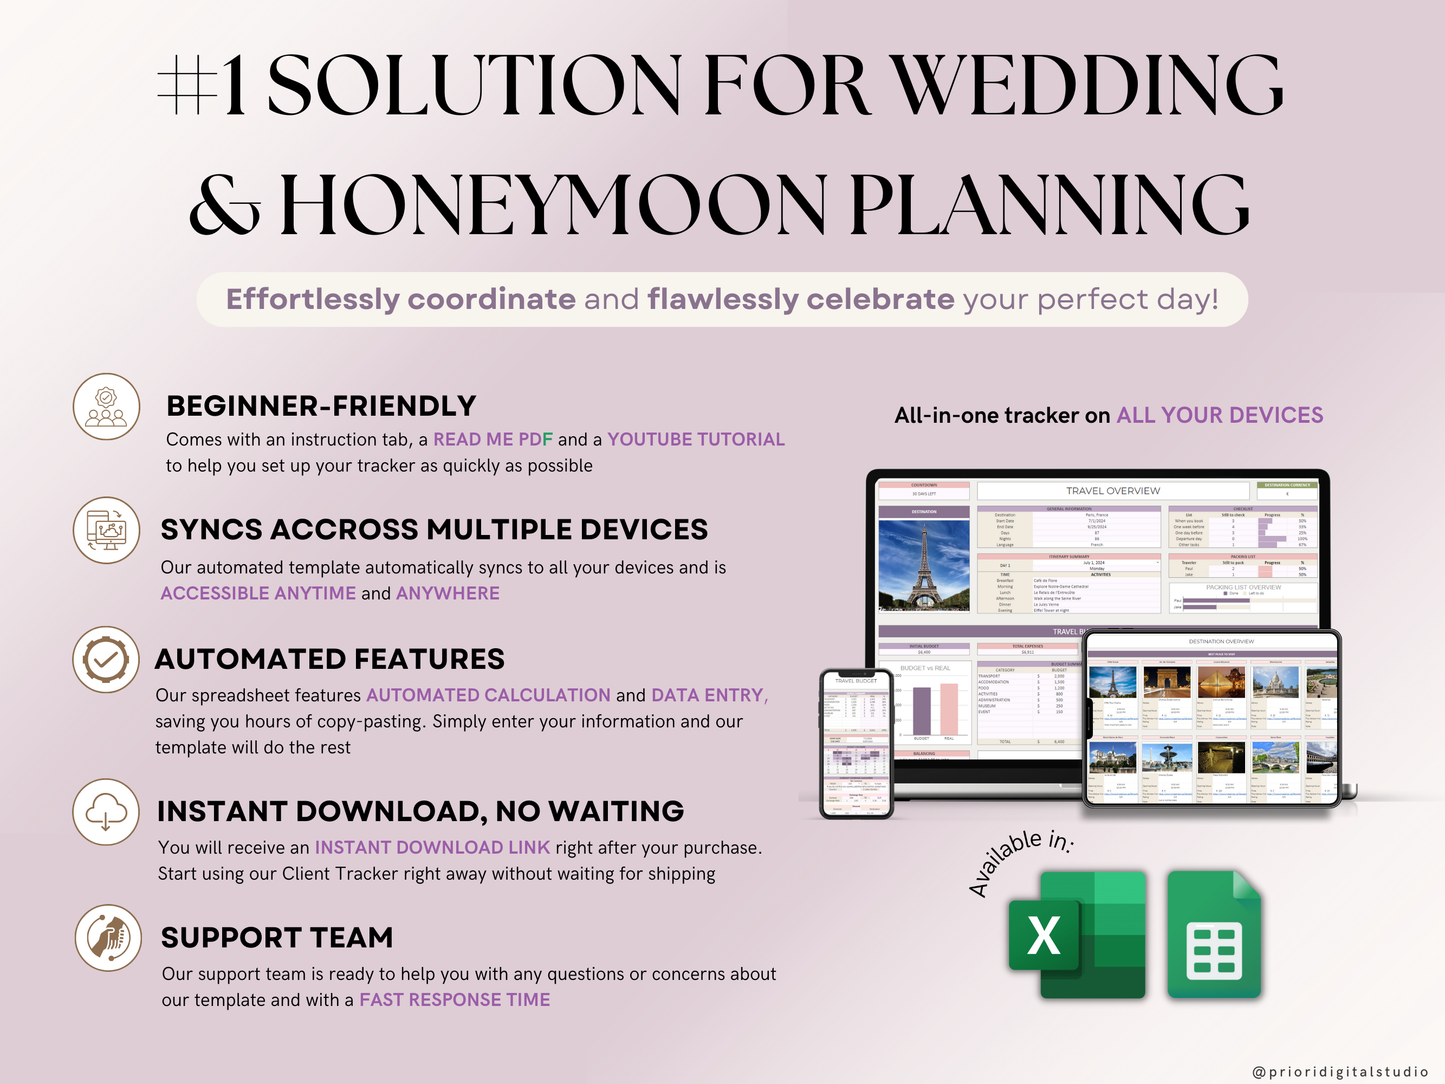 Wedding Planner Spreadsheet Wedding Budget Tracker Honeymoon Planner Checklist Guest List Tracker Wedding Travel Itinerary Seating Plan